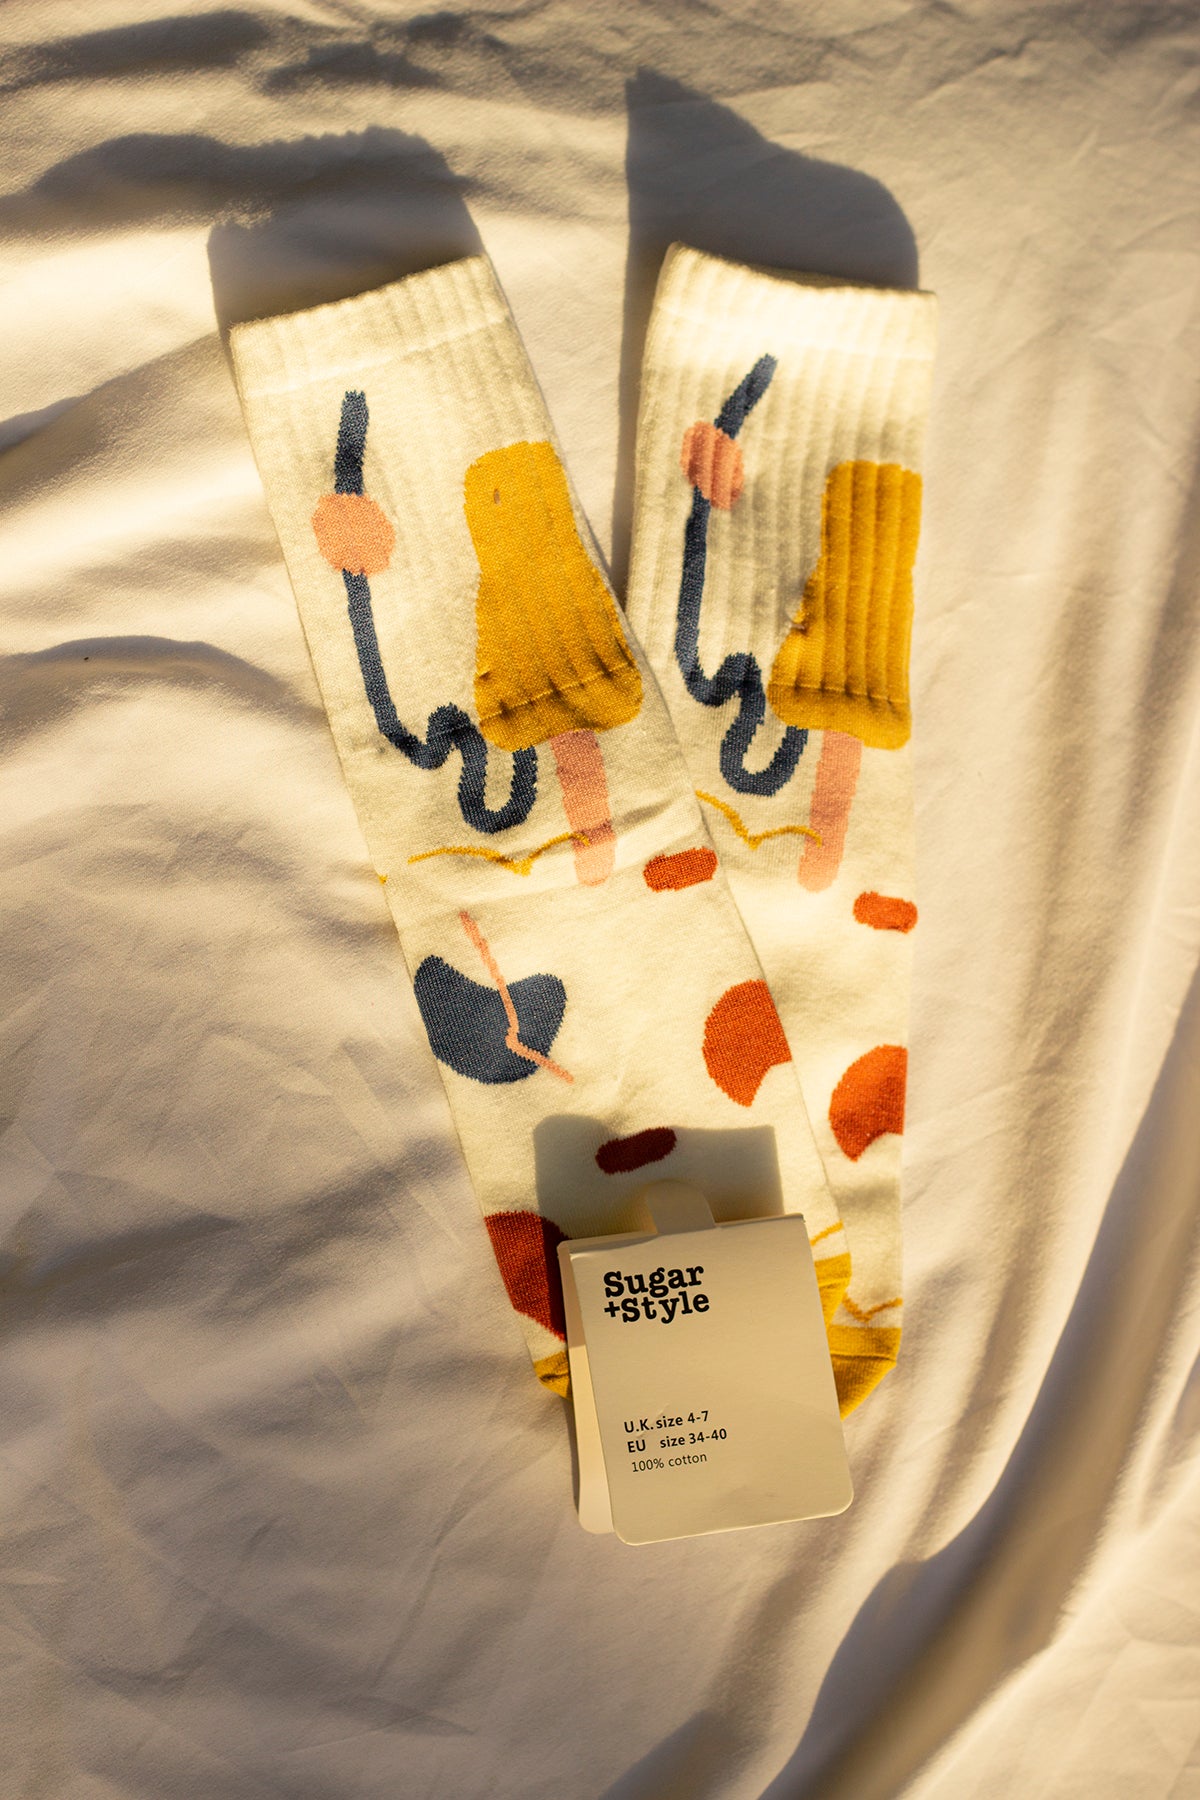 Abstract Wiggle Shape Socks - Sugar + Style